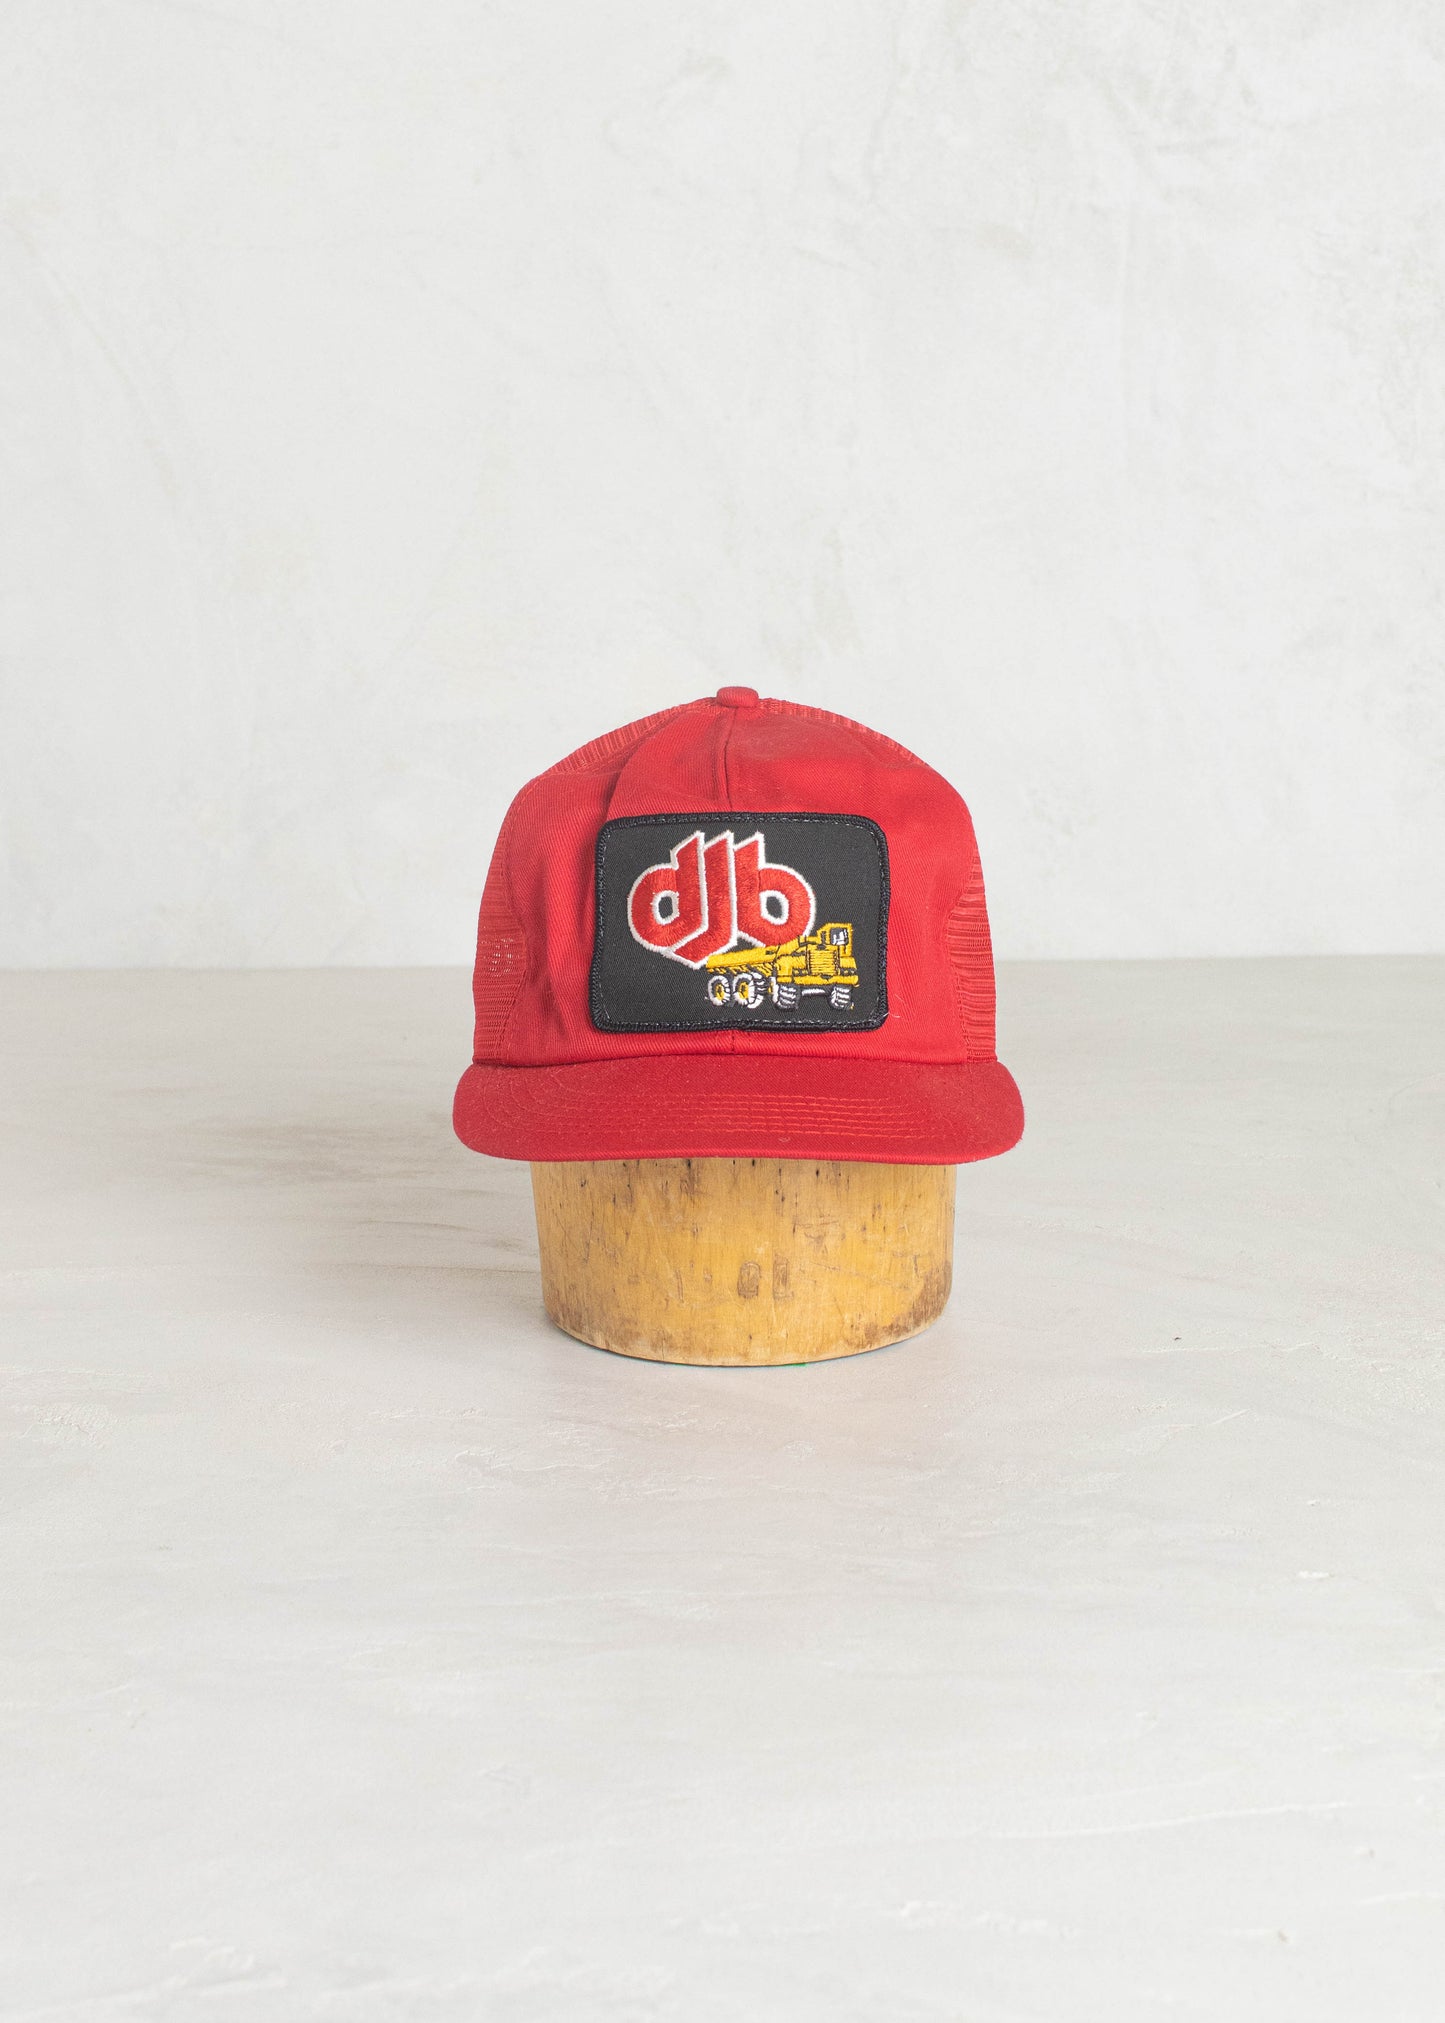 1980s K-Brand DJB Trucker Hat